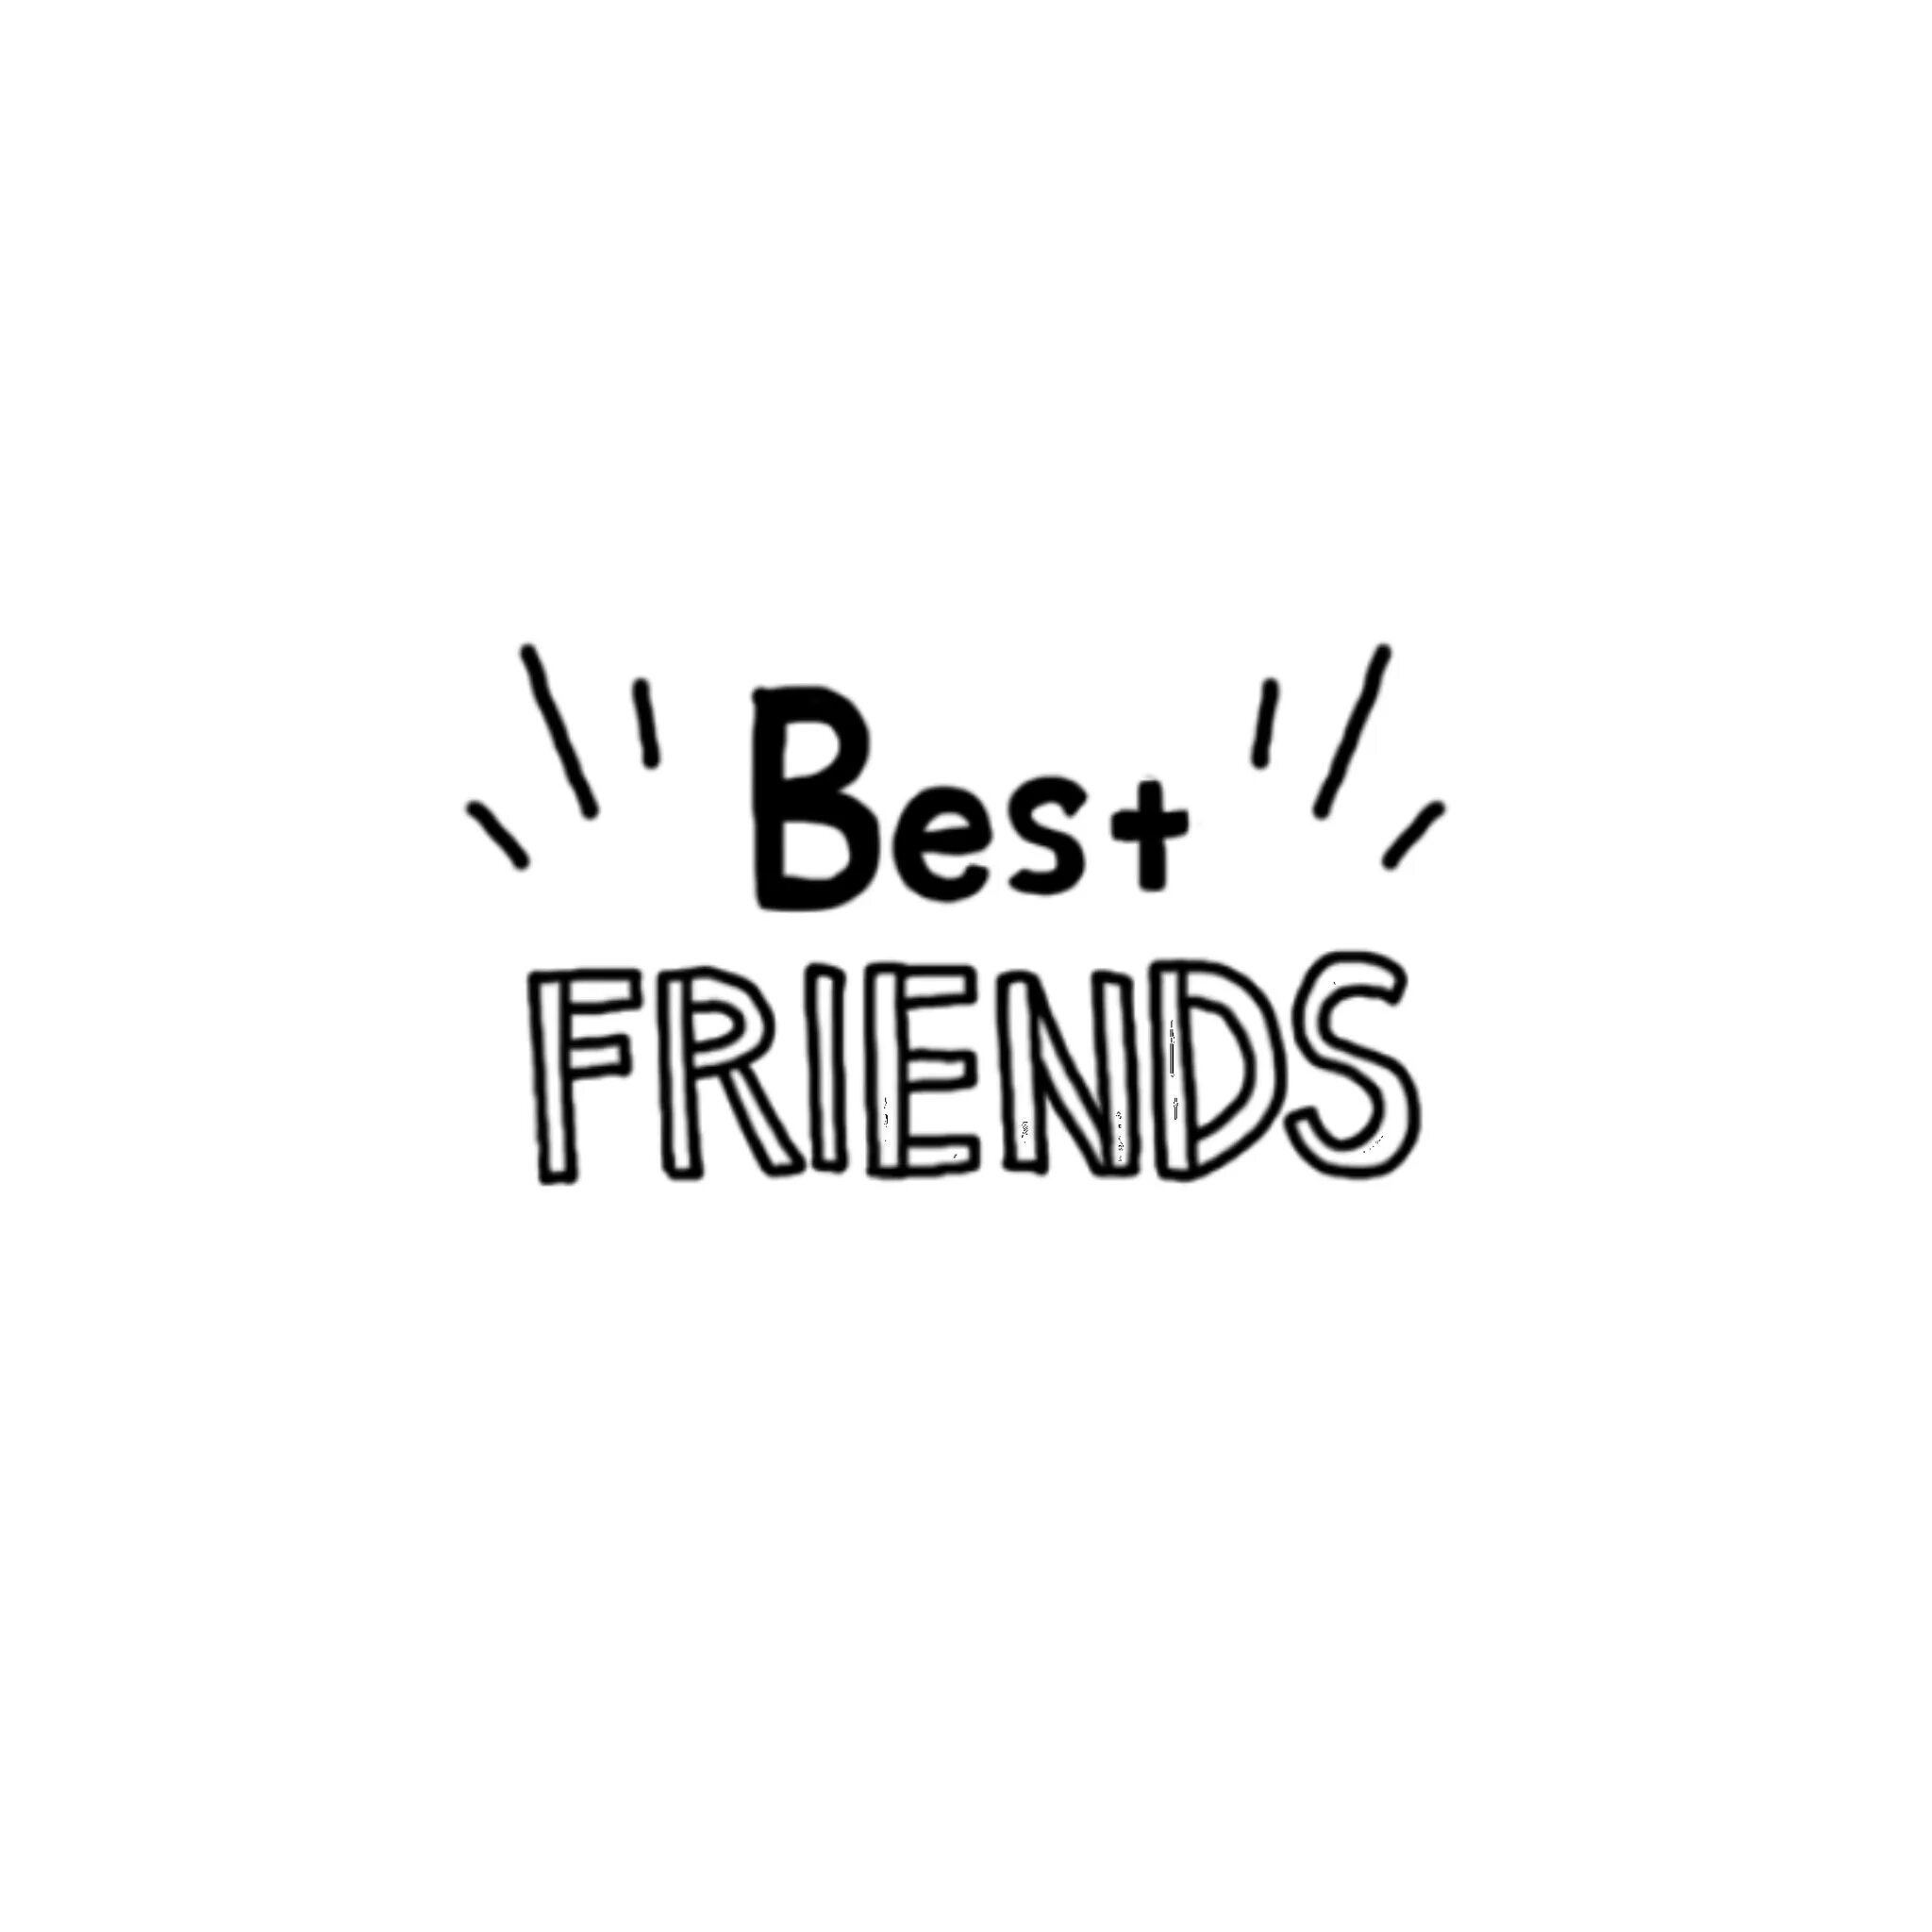 My best friend words. Friends надпись. Красивая надпись best friends. Надписи на английском. Наклейки best friends.